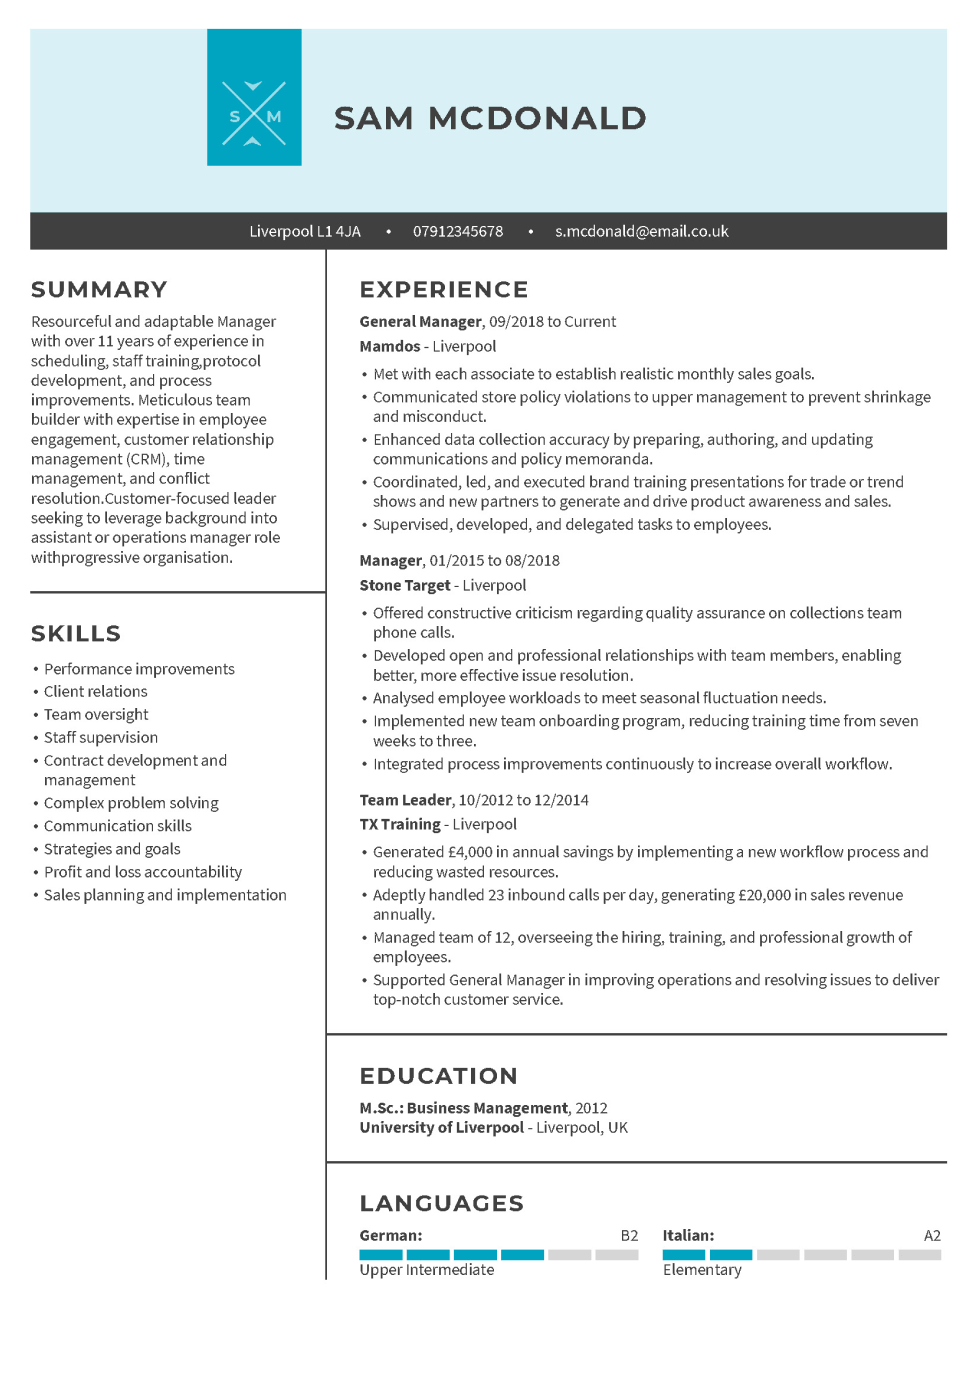 Creative CV Template